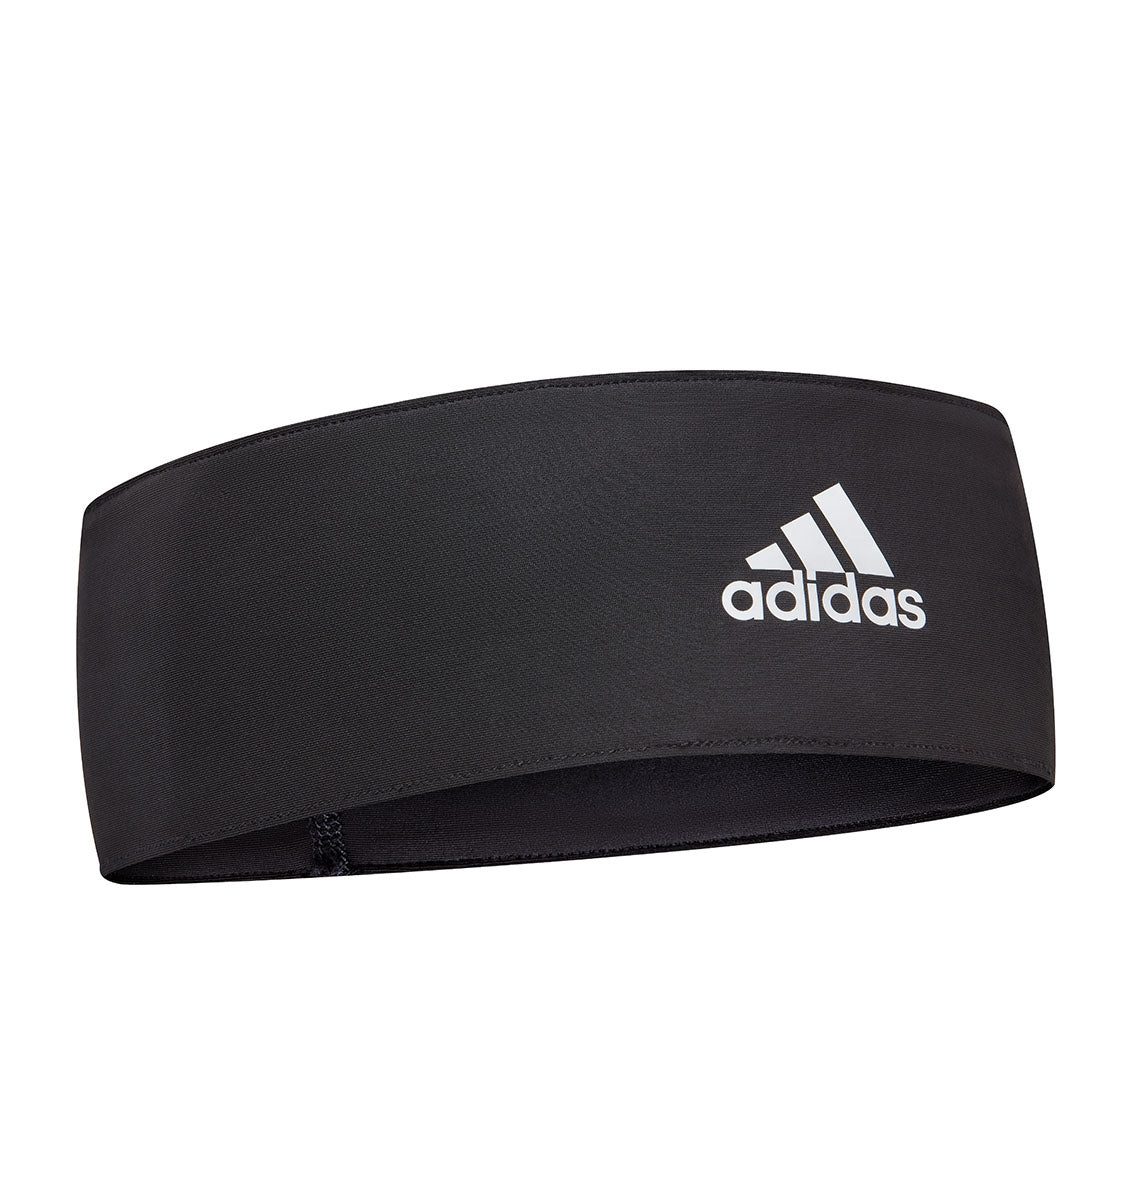 adidas Head Band - Black - 1